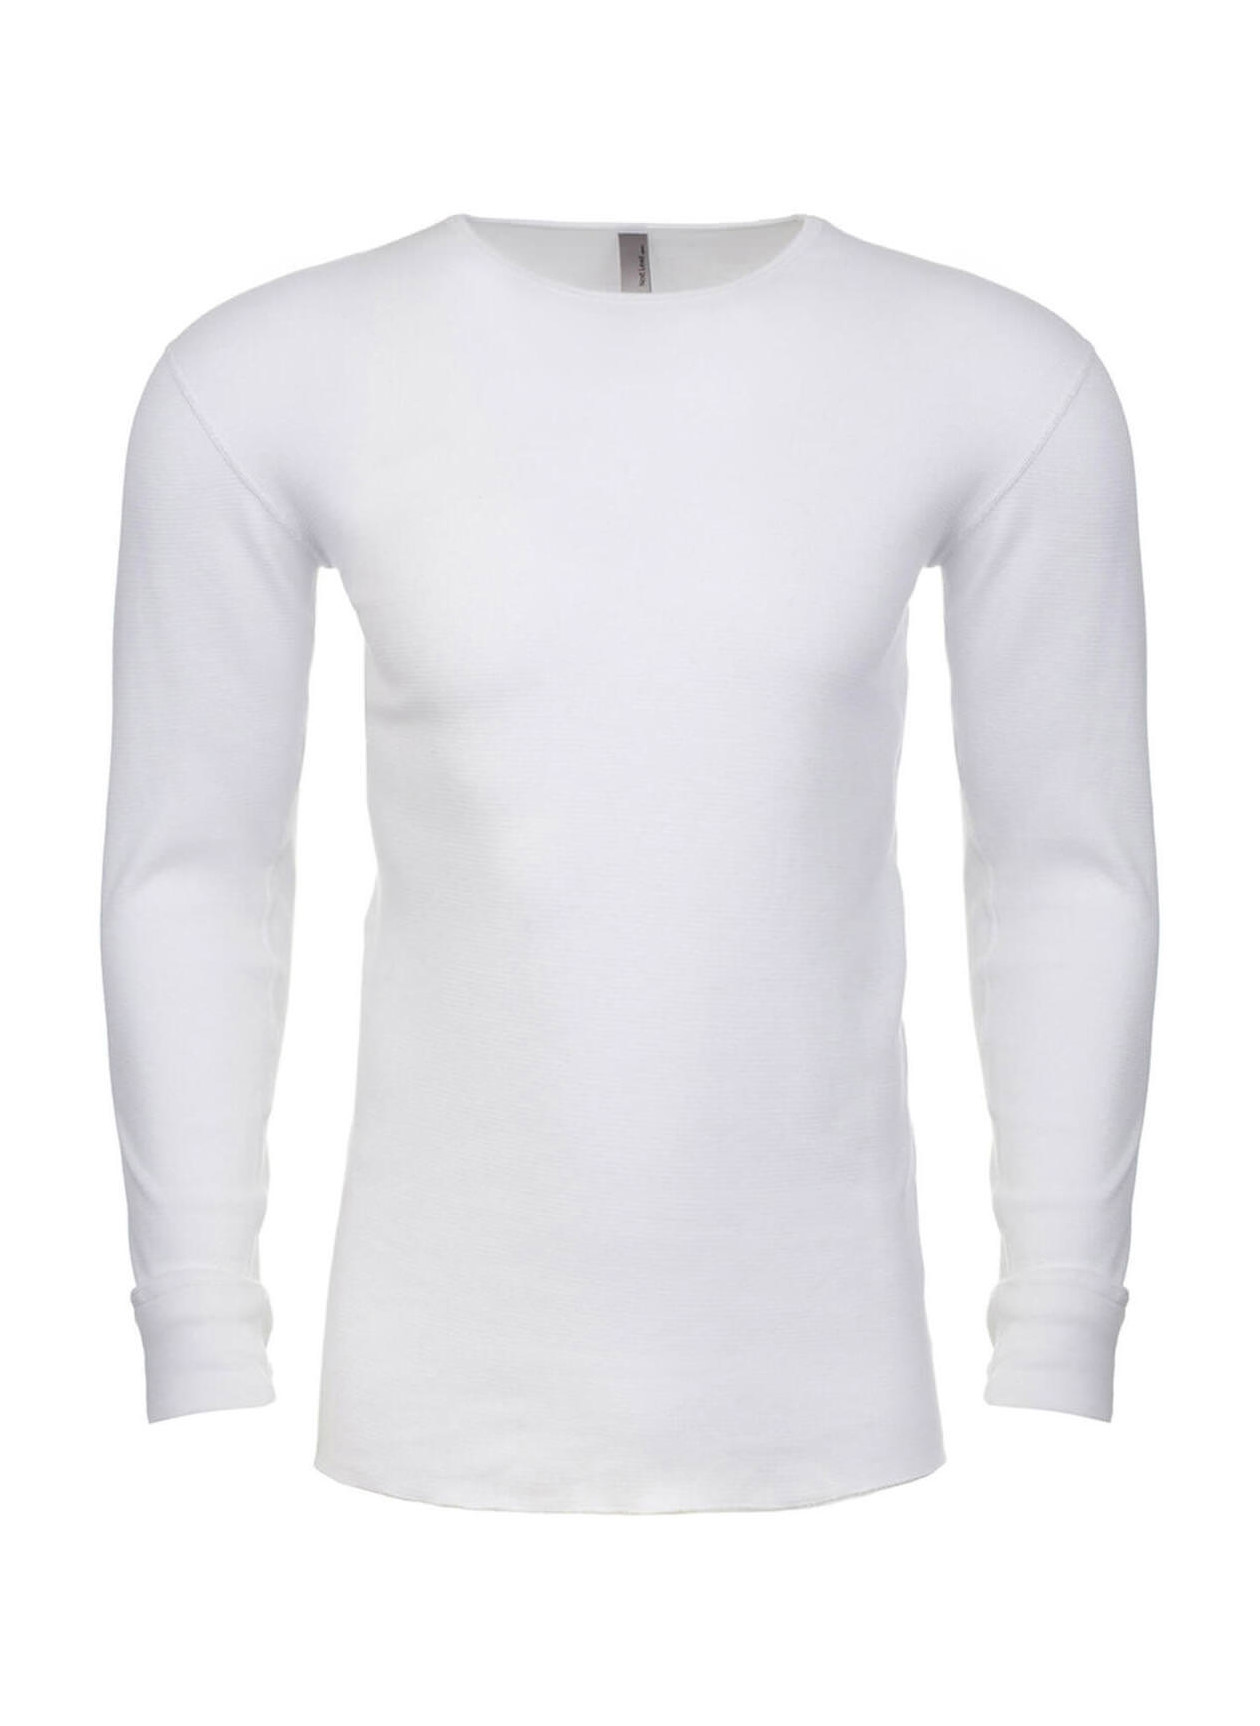 Next Level Men's White Unisex Long-Sleeve Thermal T-Shirt